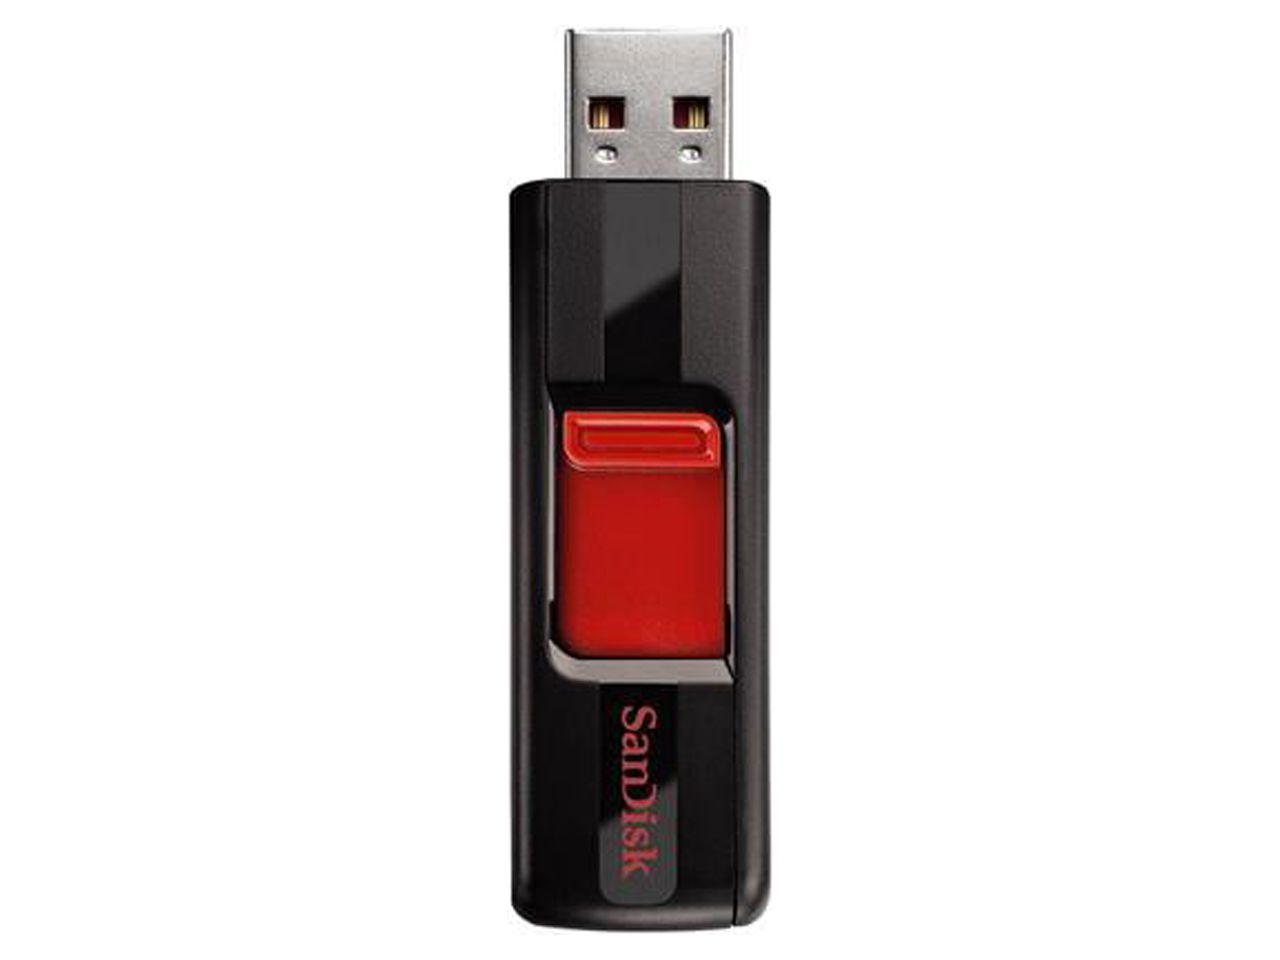 SanDisk 16GB Cruzer CZ36 USB 2.0 Flash Drive (SDCZ36-016G-B35) - image 3 of 4